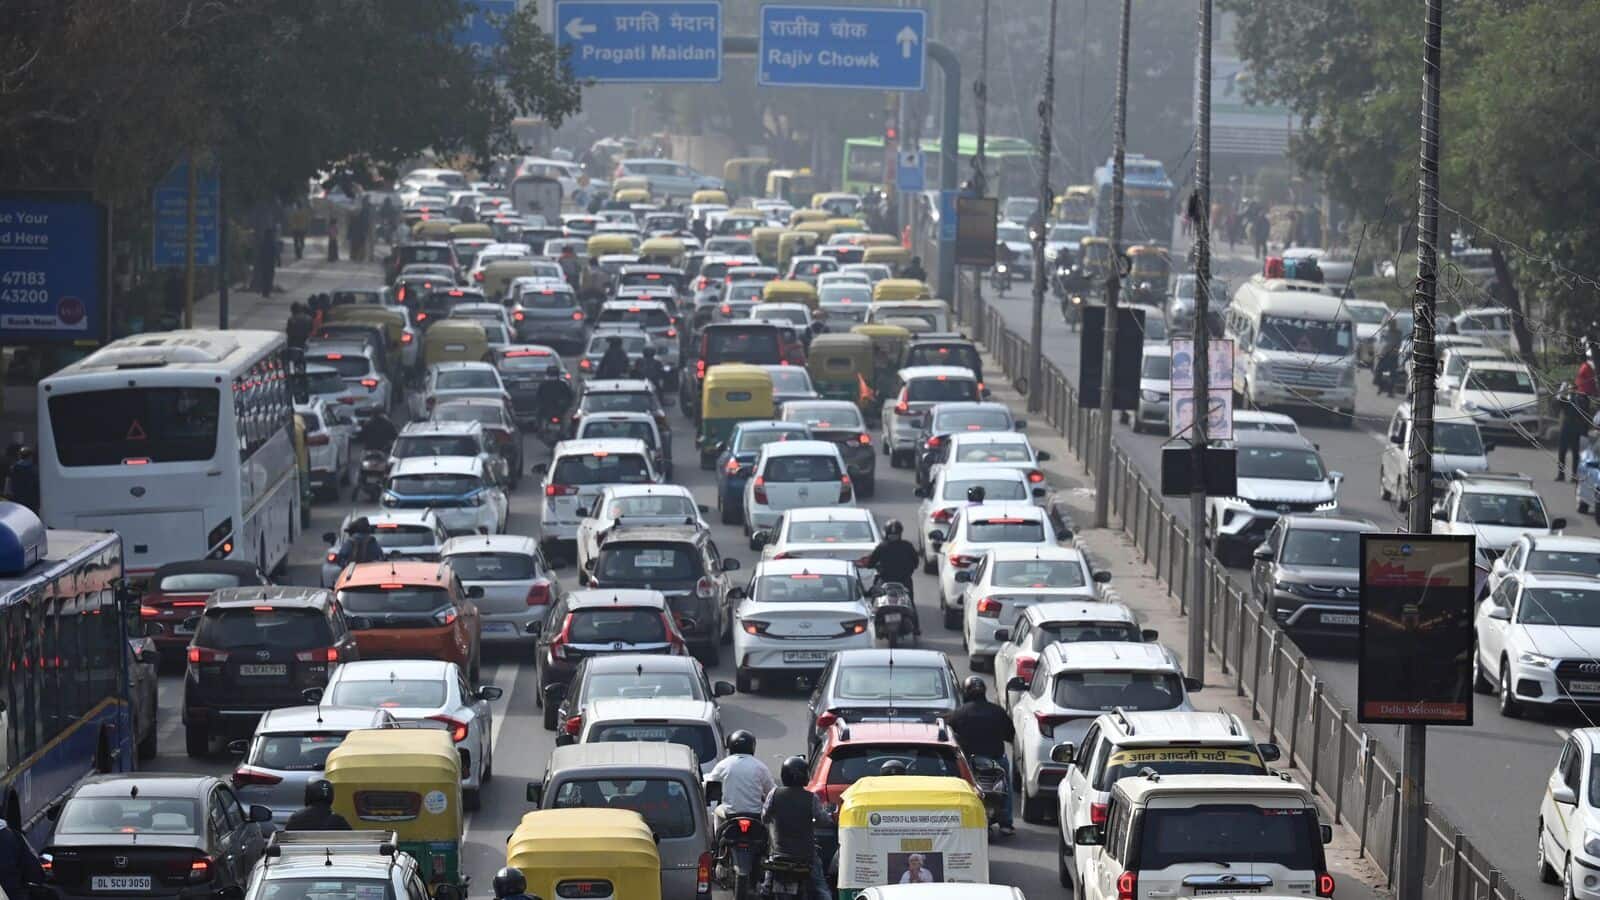 Delhi: Traffic advisory issued ahead of PM Modi's Dwarka rally